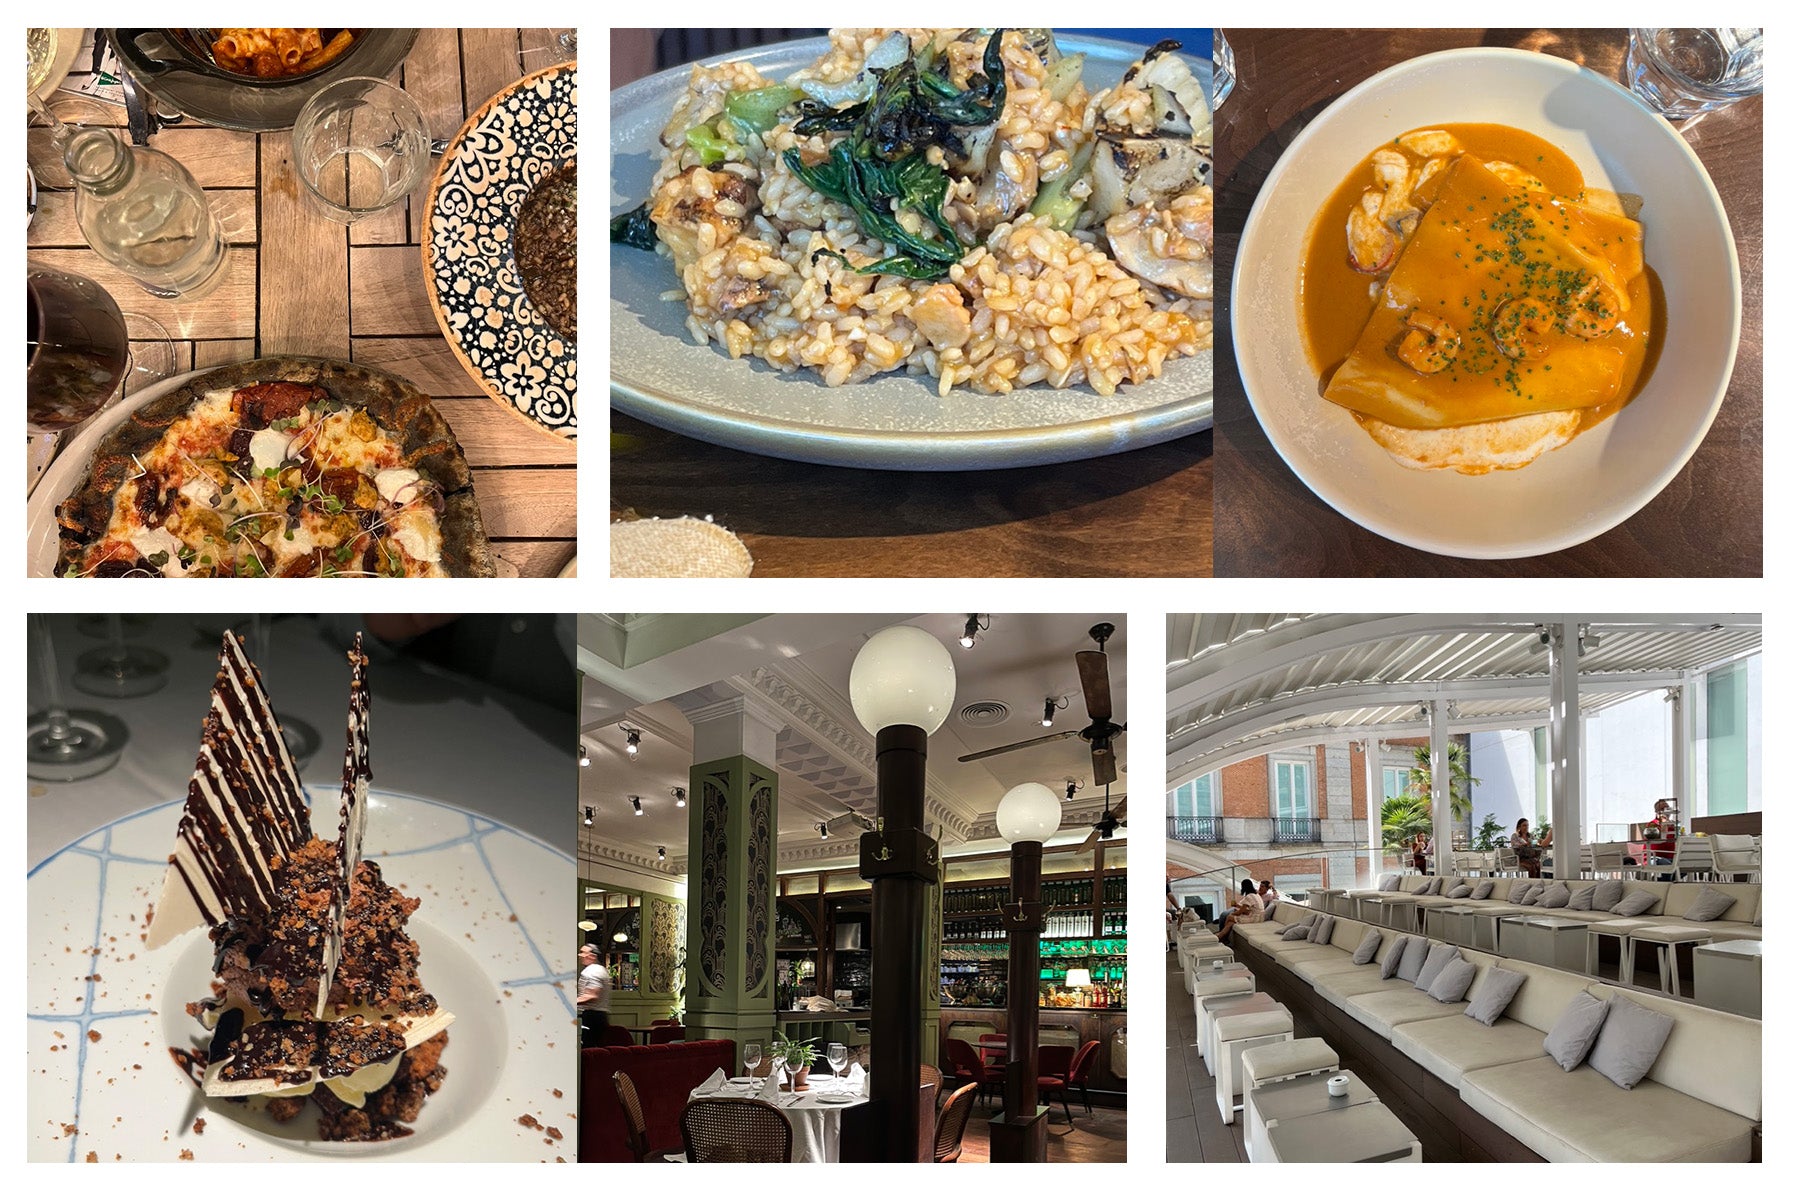 Food and interior views of Madrid restaurants.